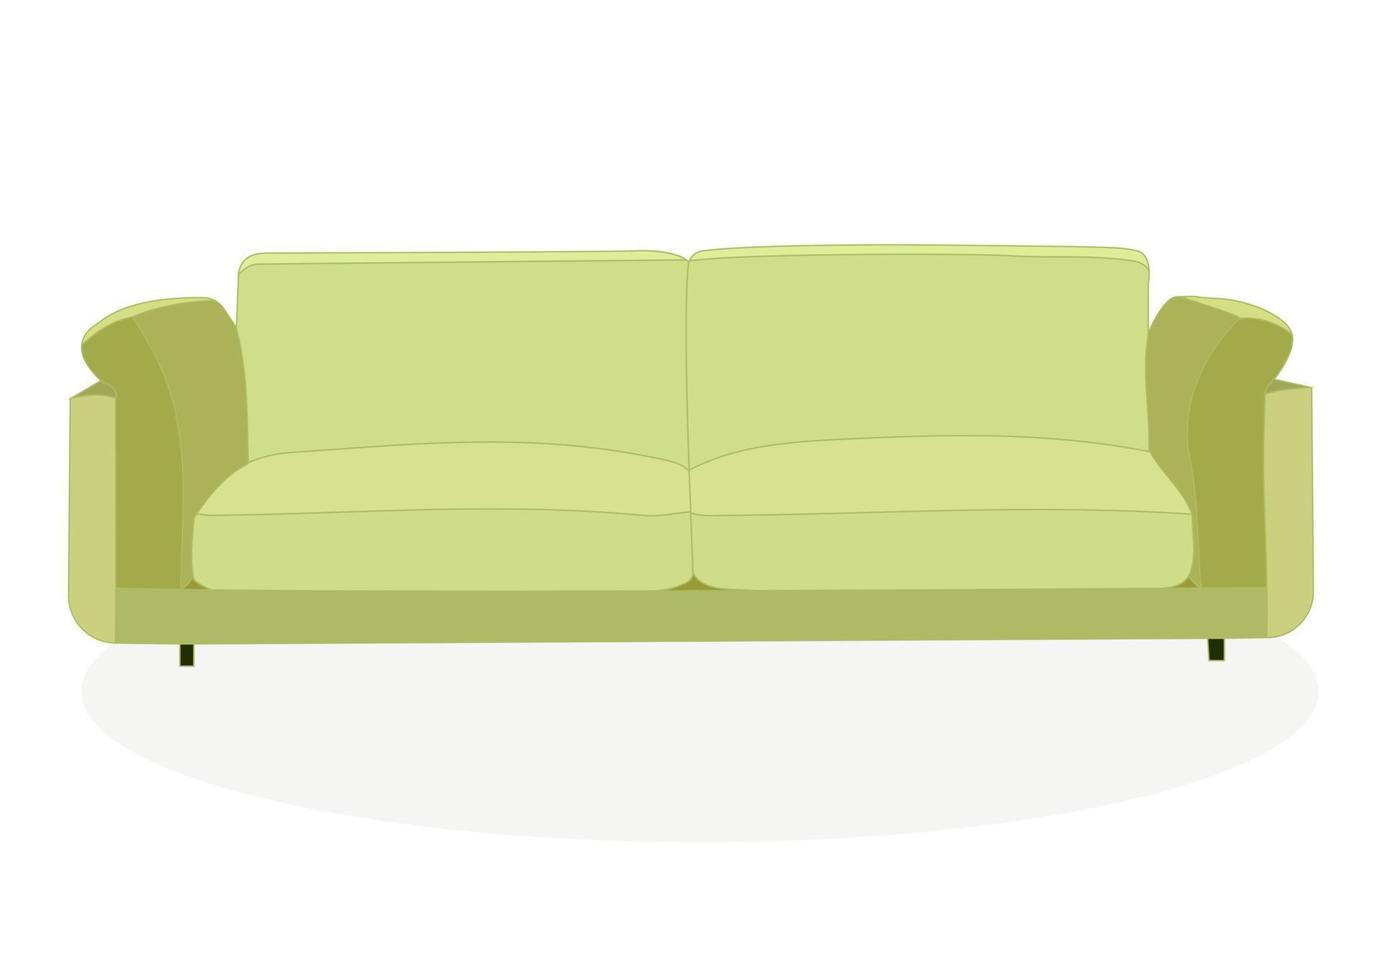 modieuze comfortabele stijlvolle bank. object, meubelmodel. vlakke stijl. vector